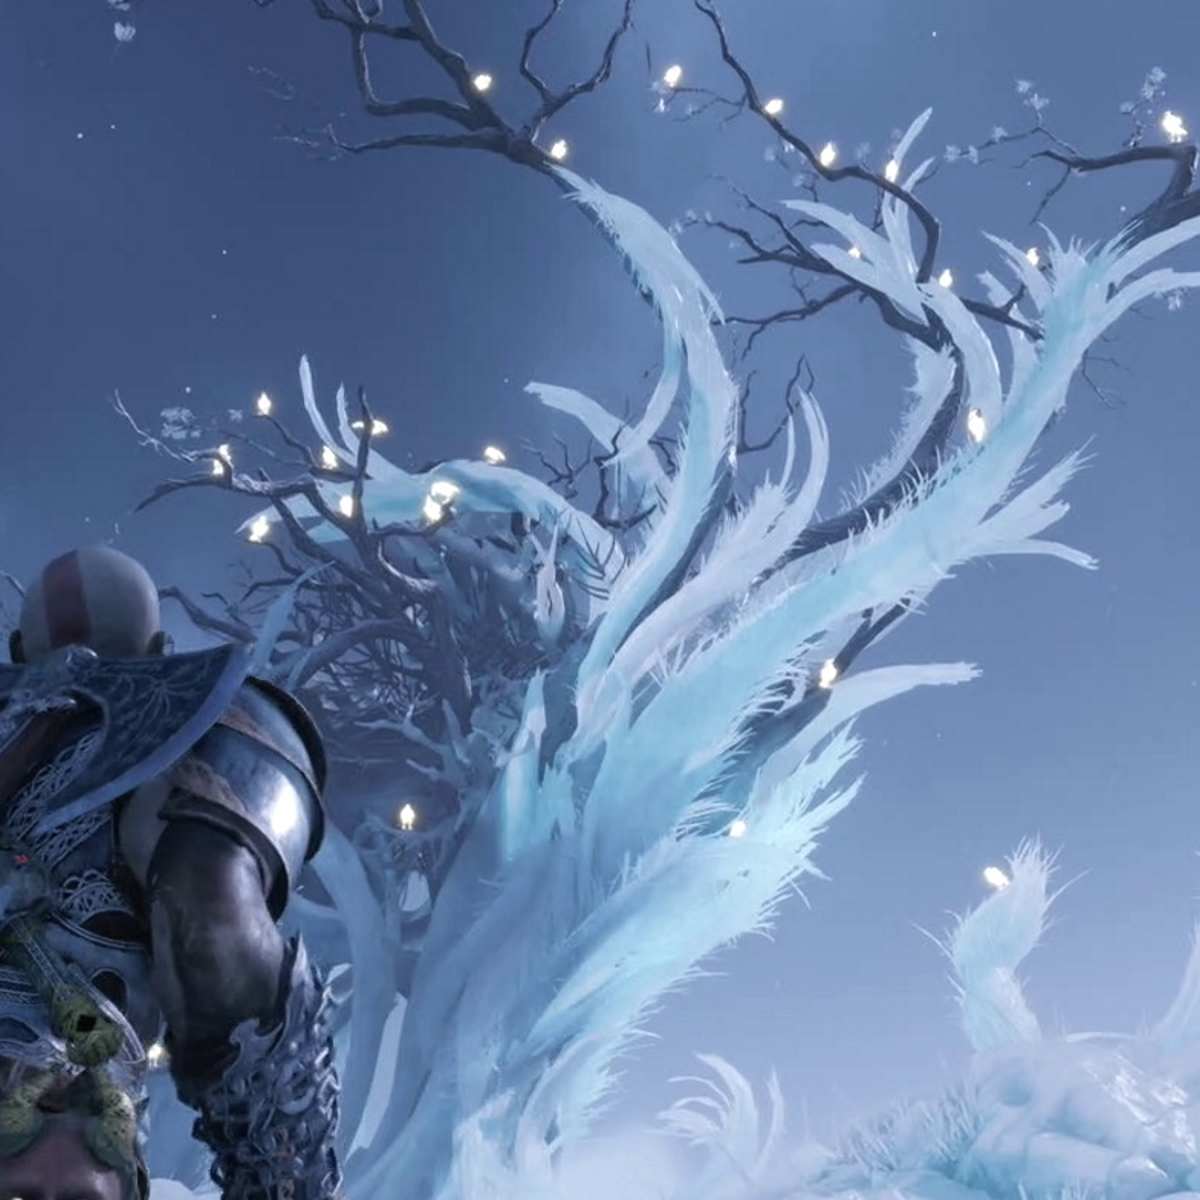 God of War Ragnarök: Where to find all the Eyes of Odin ravens